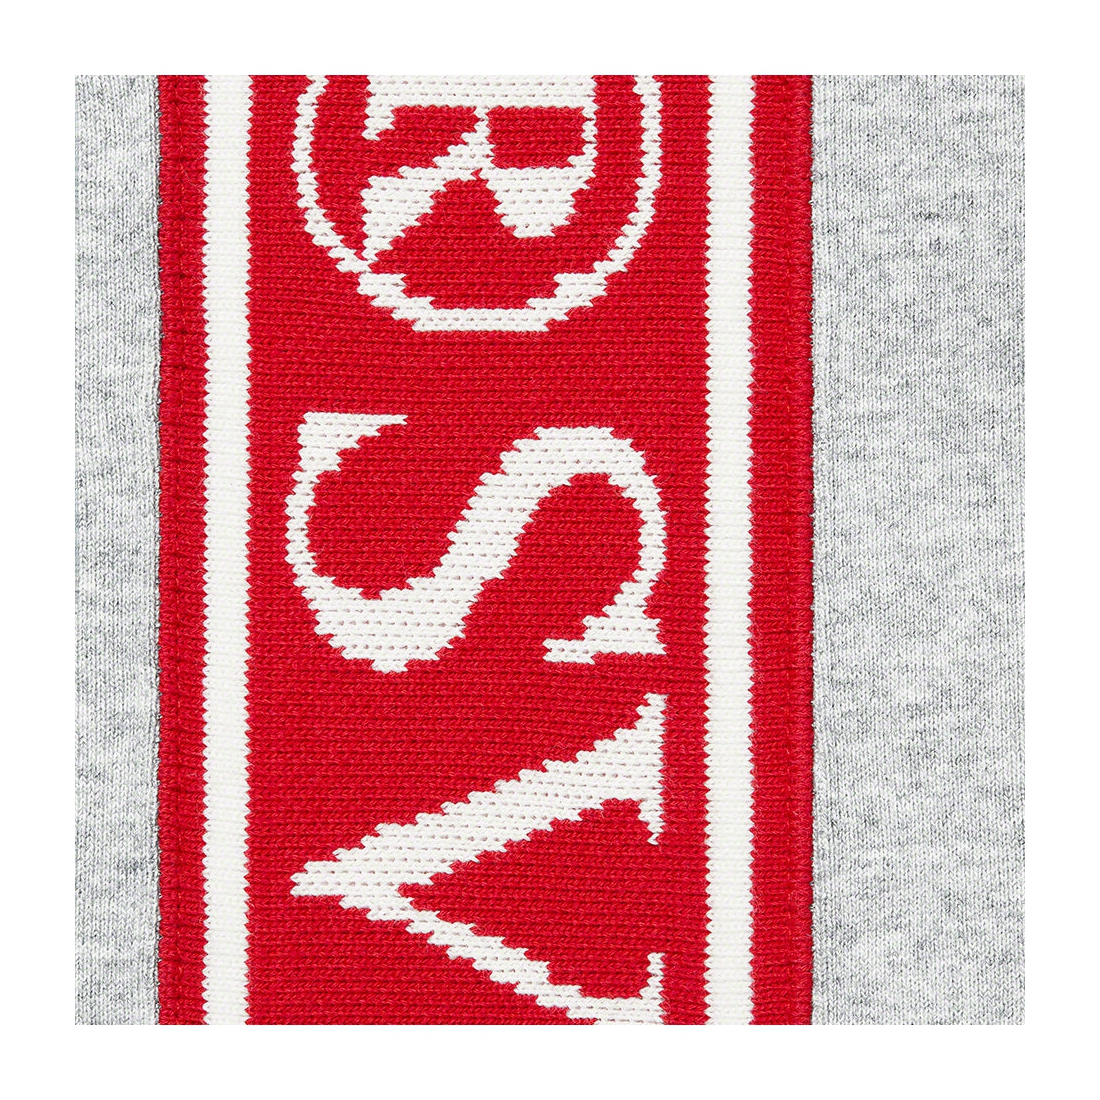 Details on Roman Zip Up Hooded Sweatshirt Heather Grey from spring summer
                                                    2023 (Price is $168)